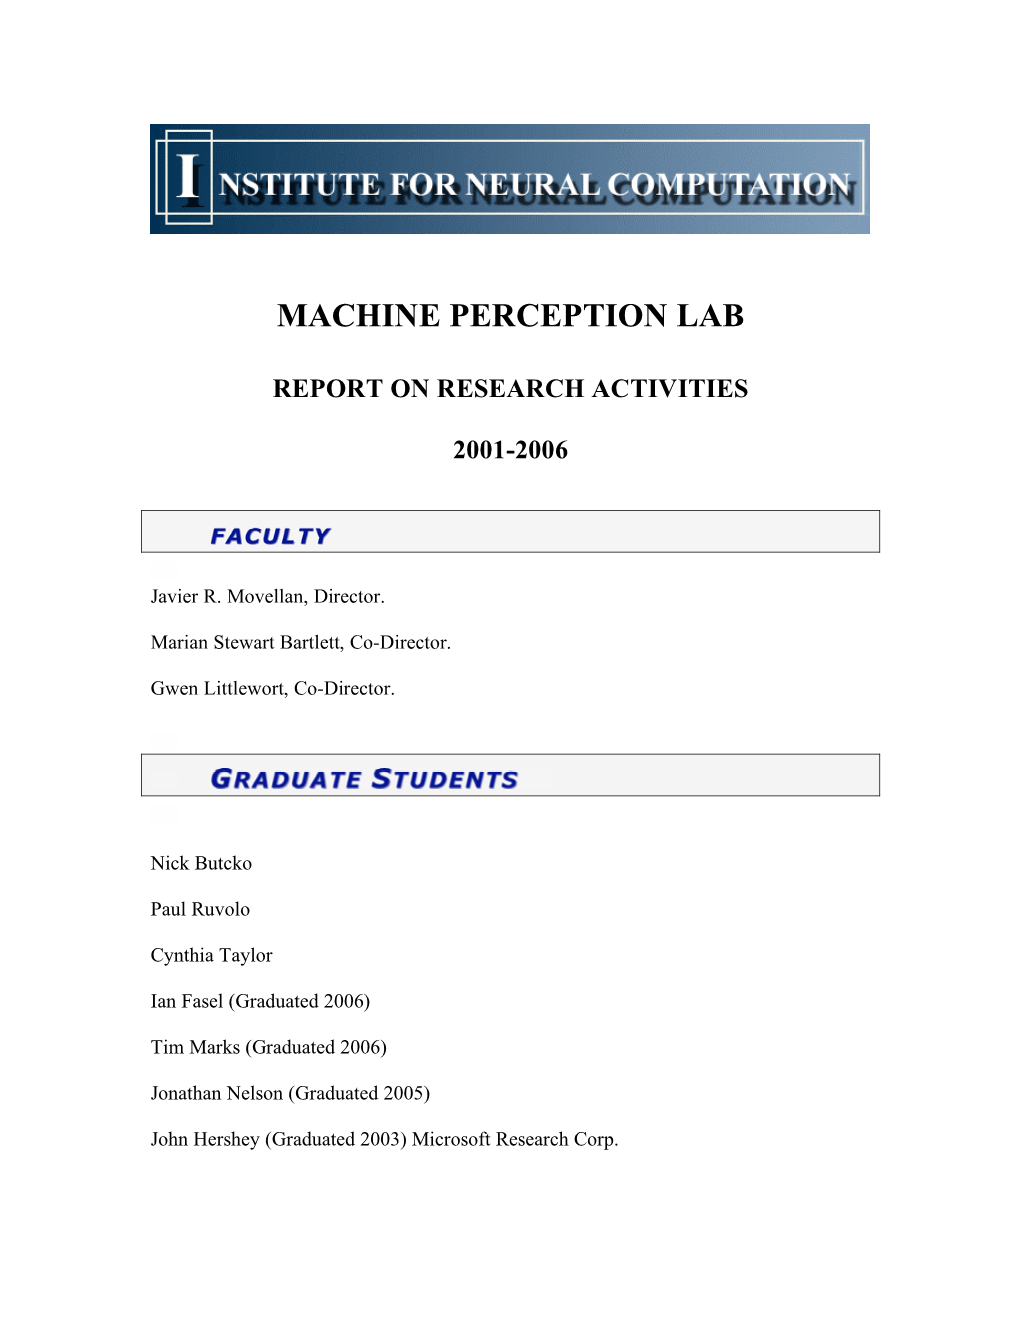 Machine Perception Lab